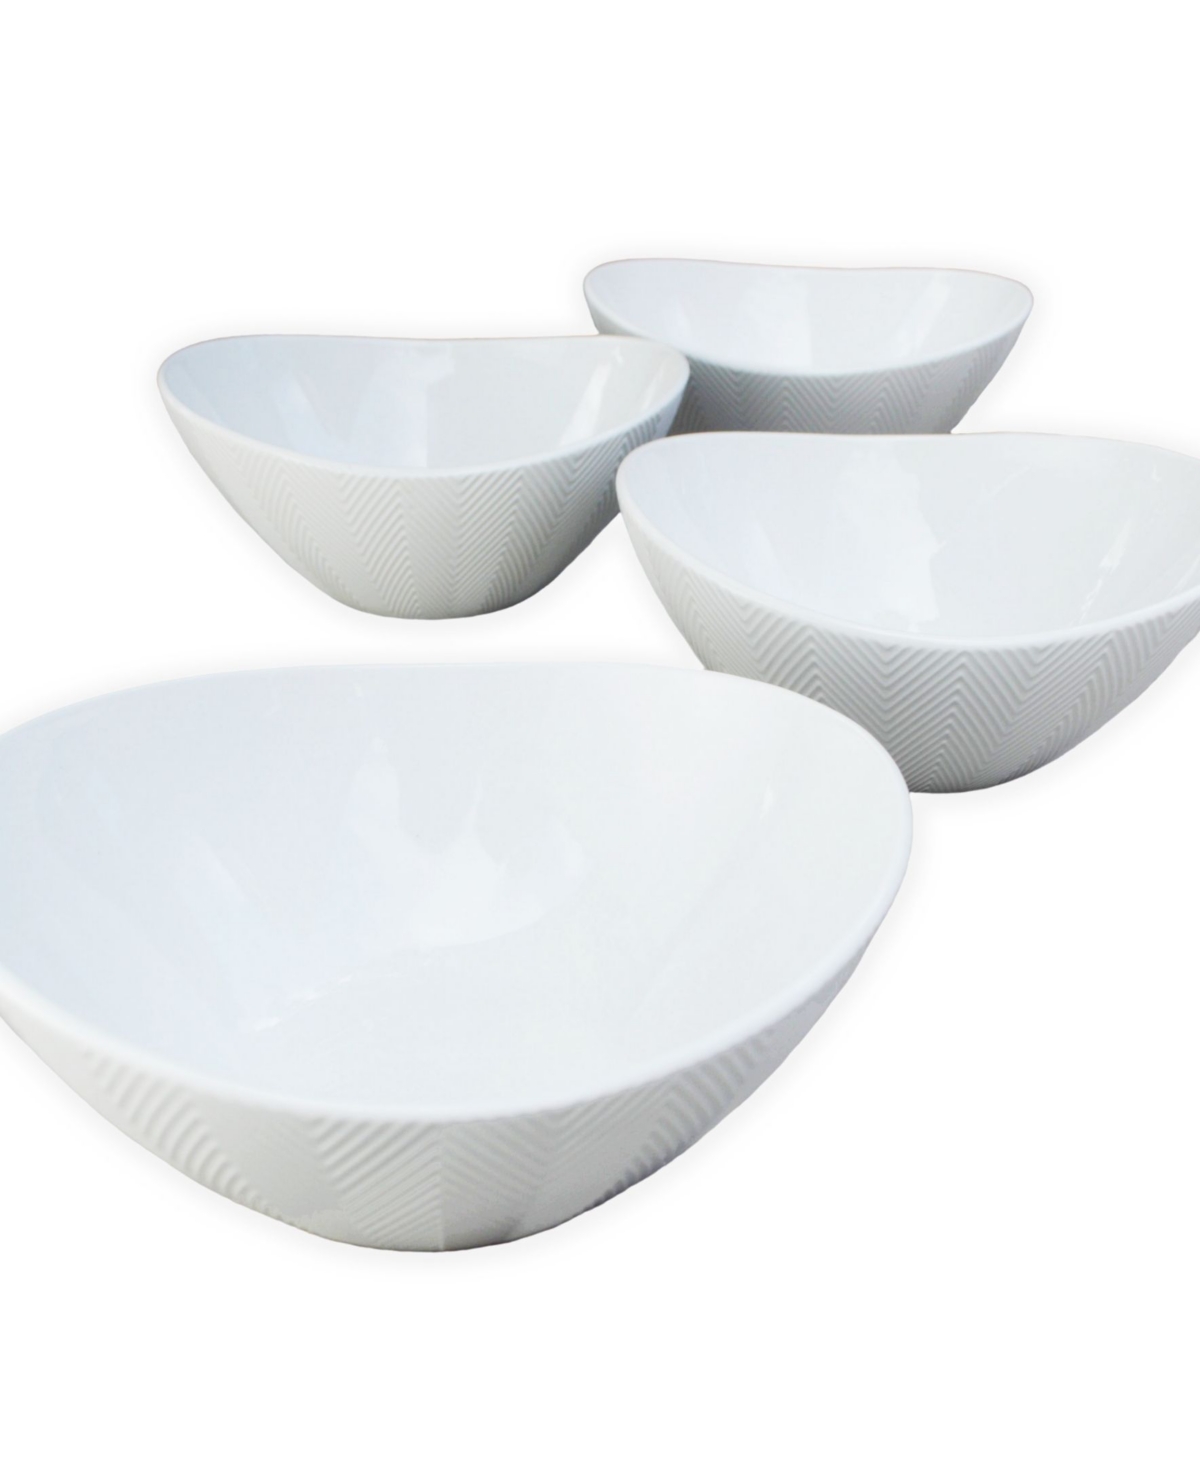 Euro Ceramica Highlands Serving Bowl Set, 4 Piece In White